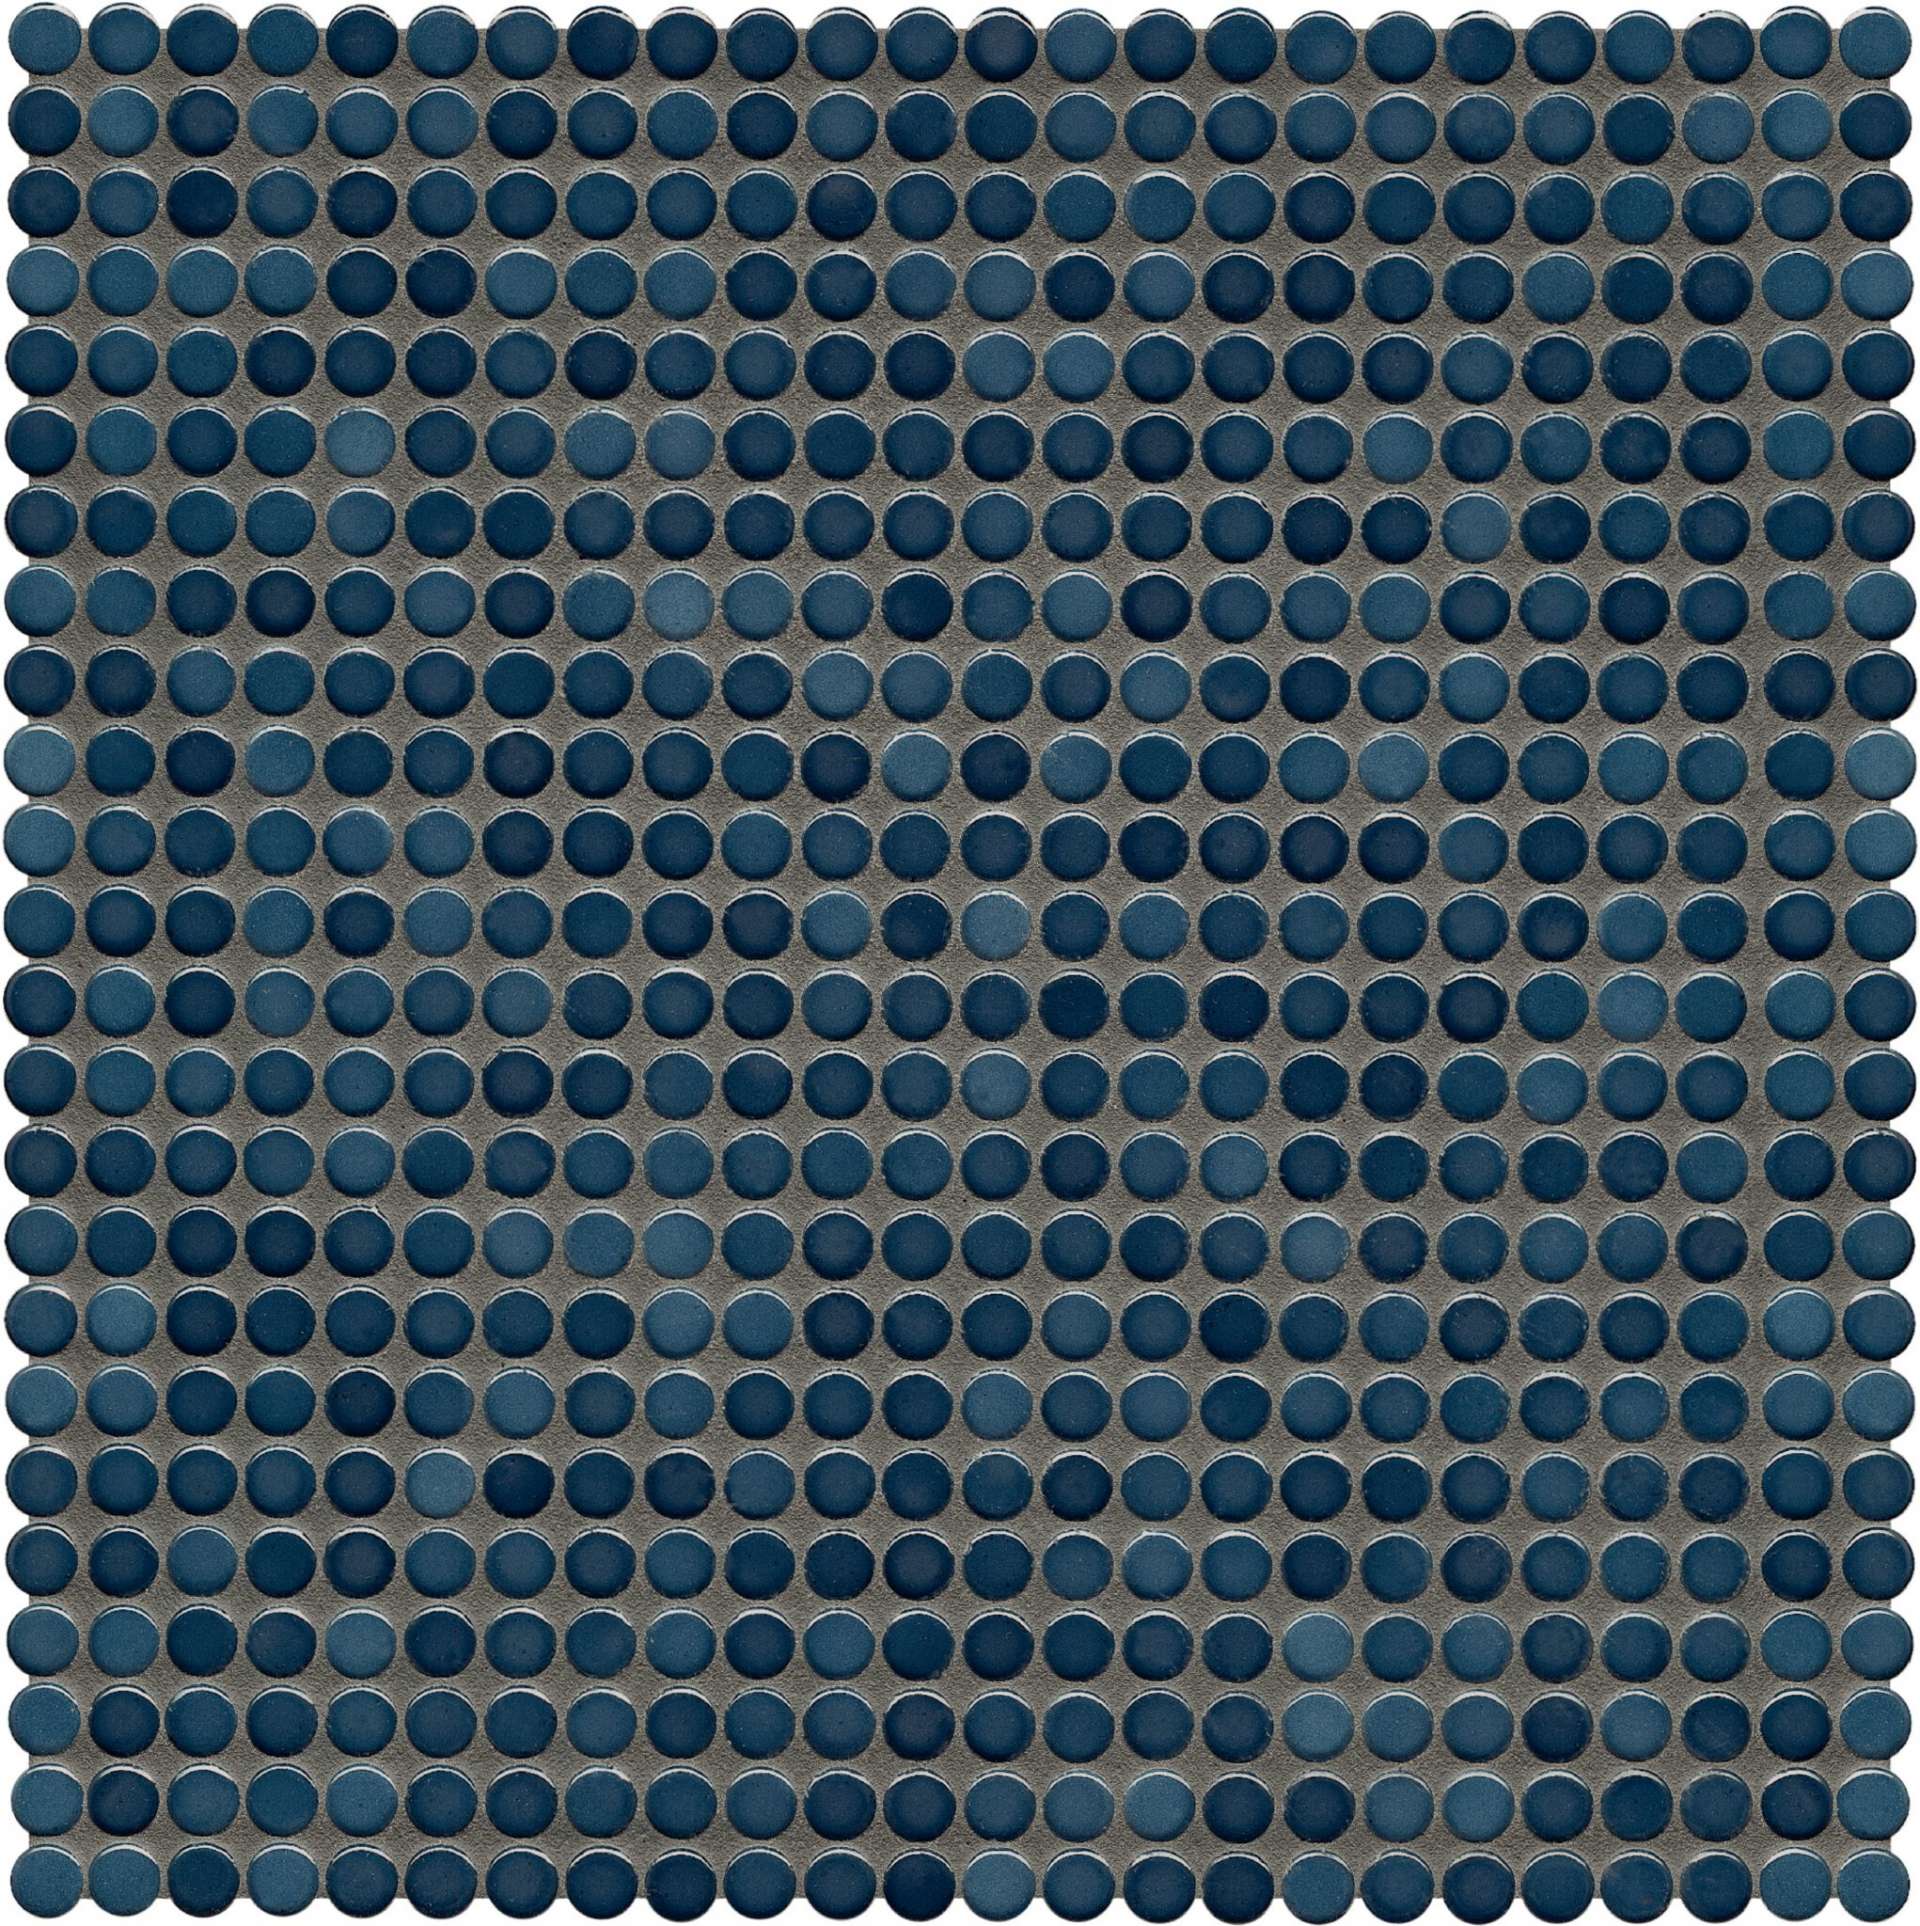 Мозаика Jasba Loop Stahlblau 40009H-44, цвет синий, поверхность глянцевая, круг и овал, 316x316